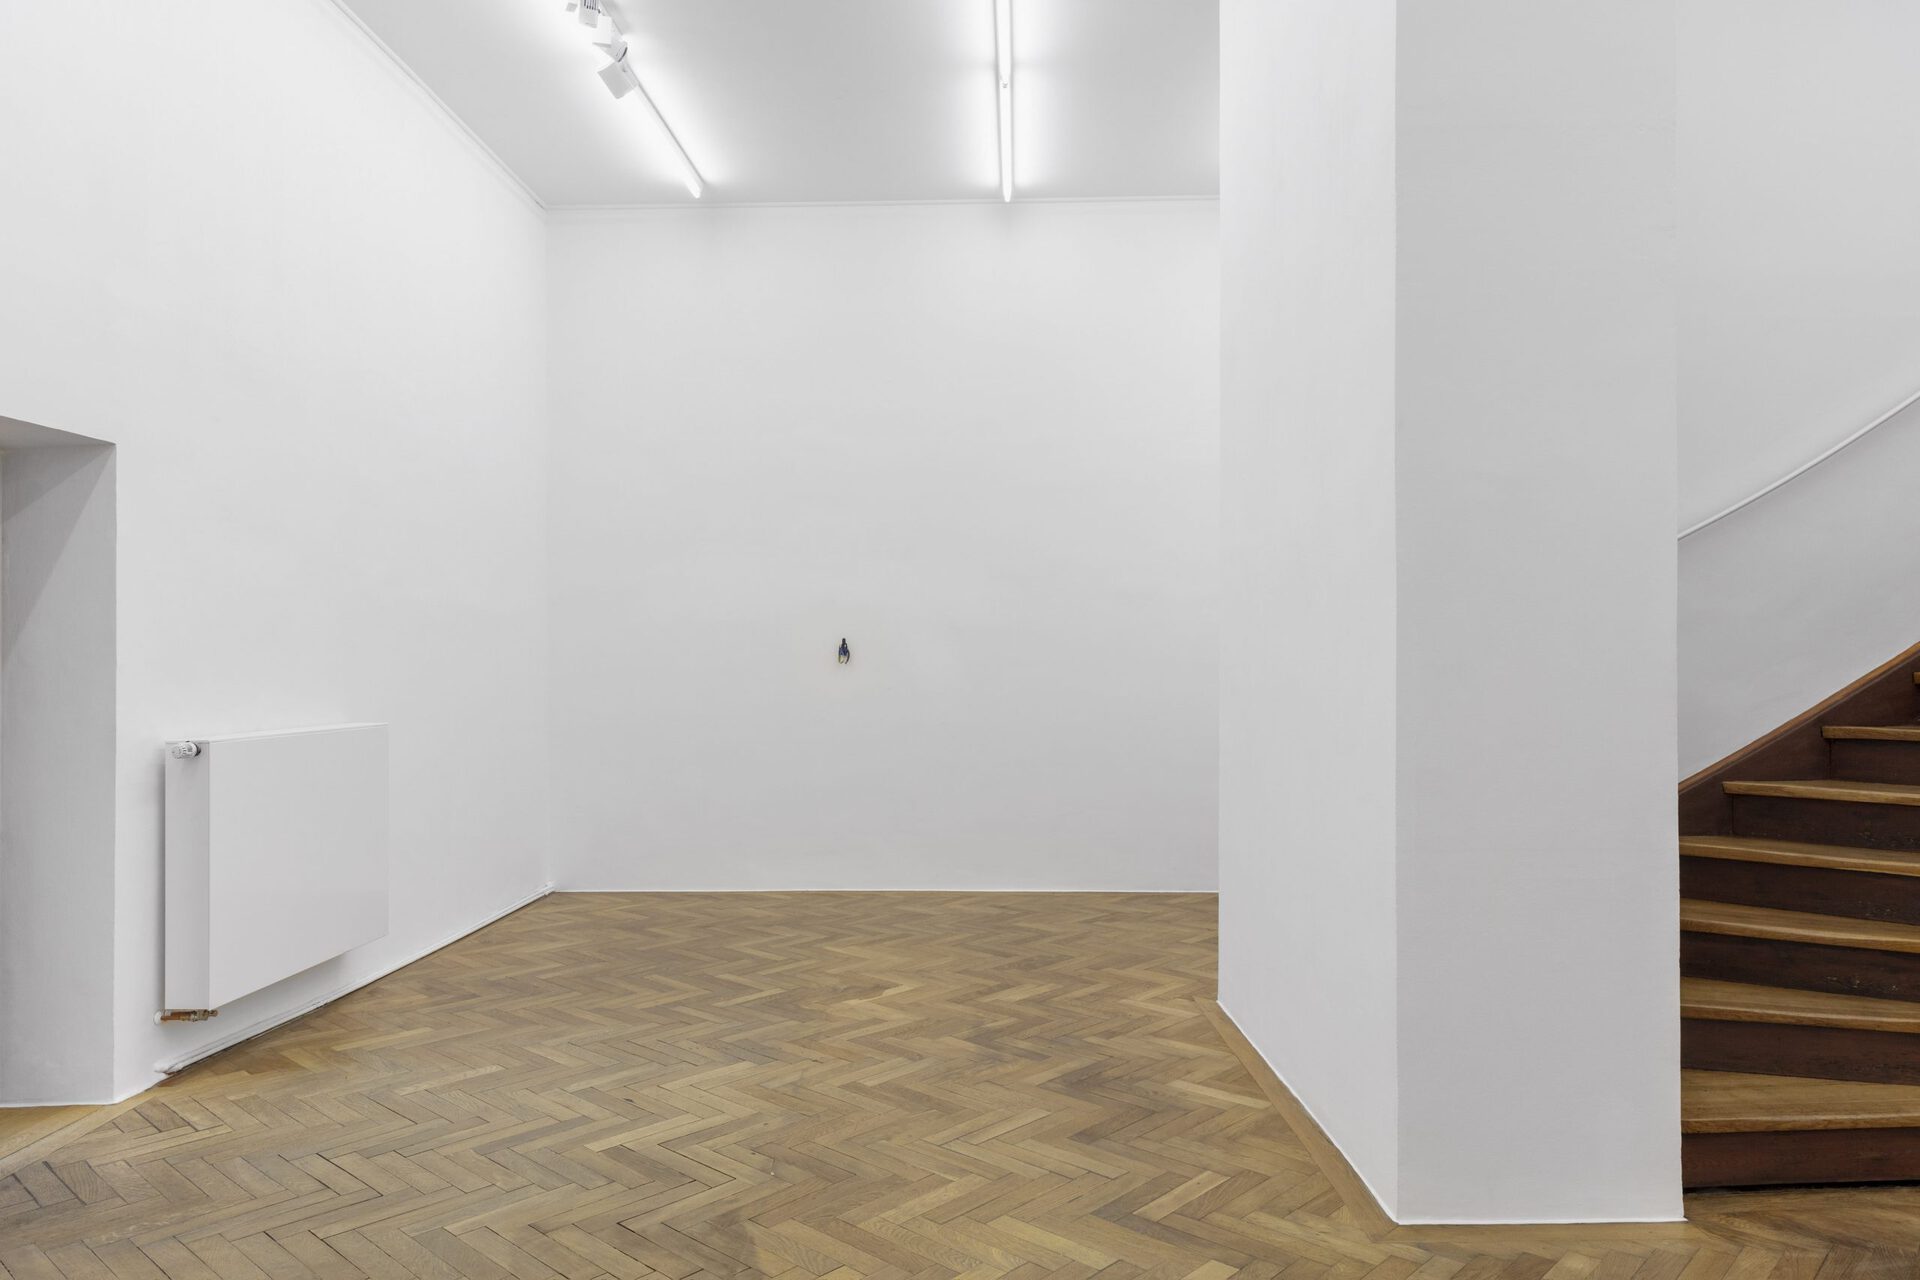 David Fesl, installation view, 2022, Sperling, Munich